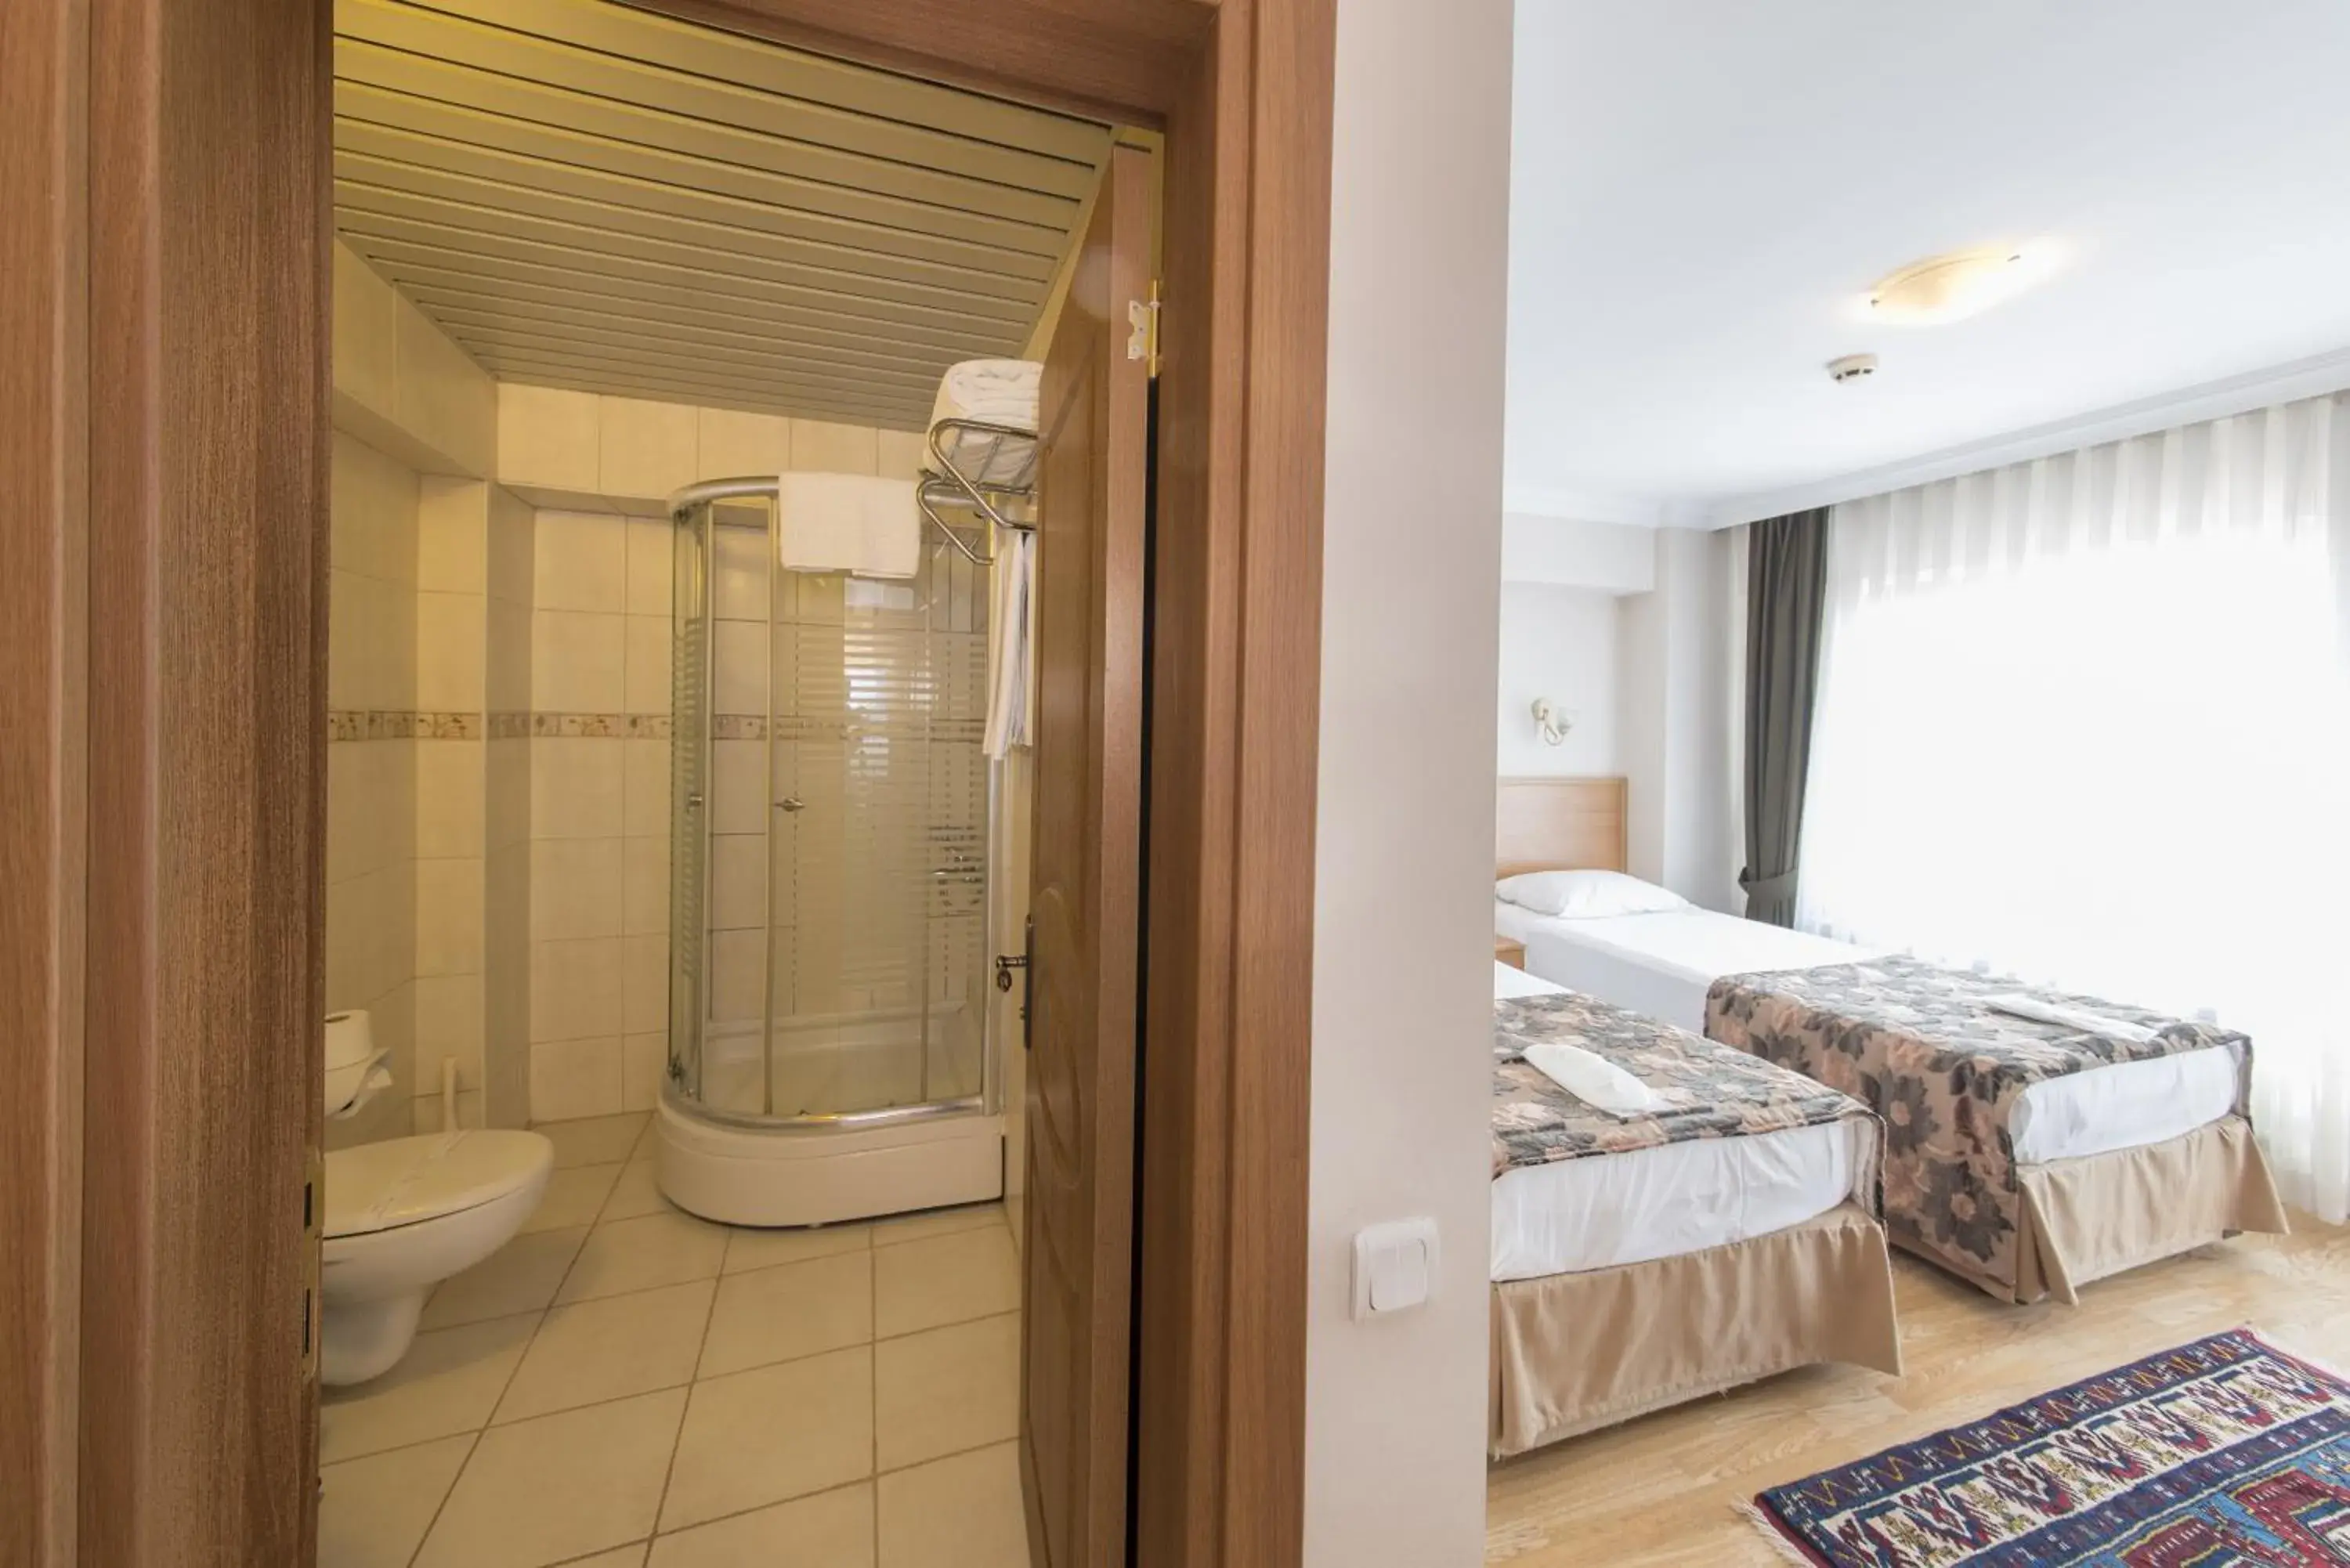 Photo of the whole room, Bathroom in Deniz Houses